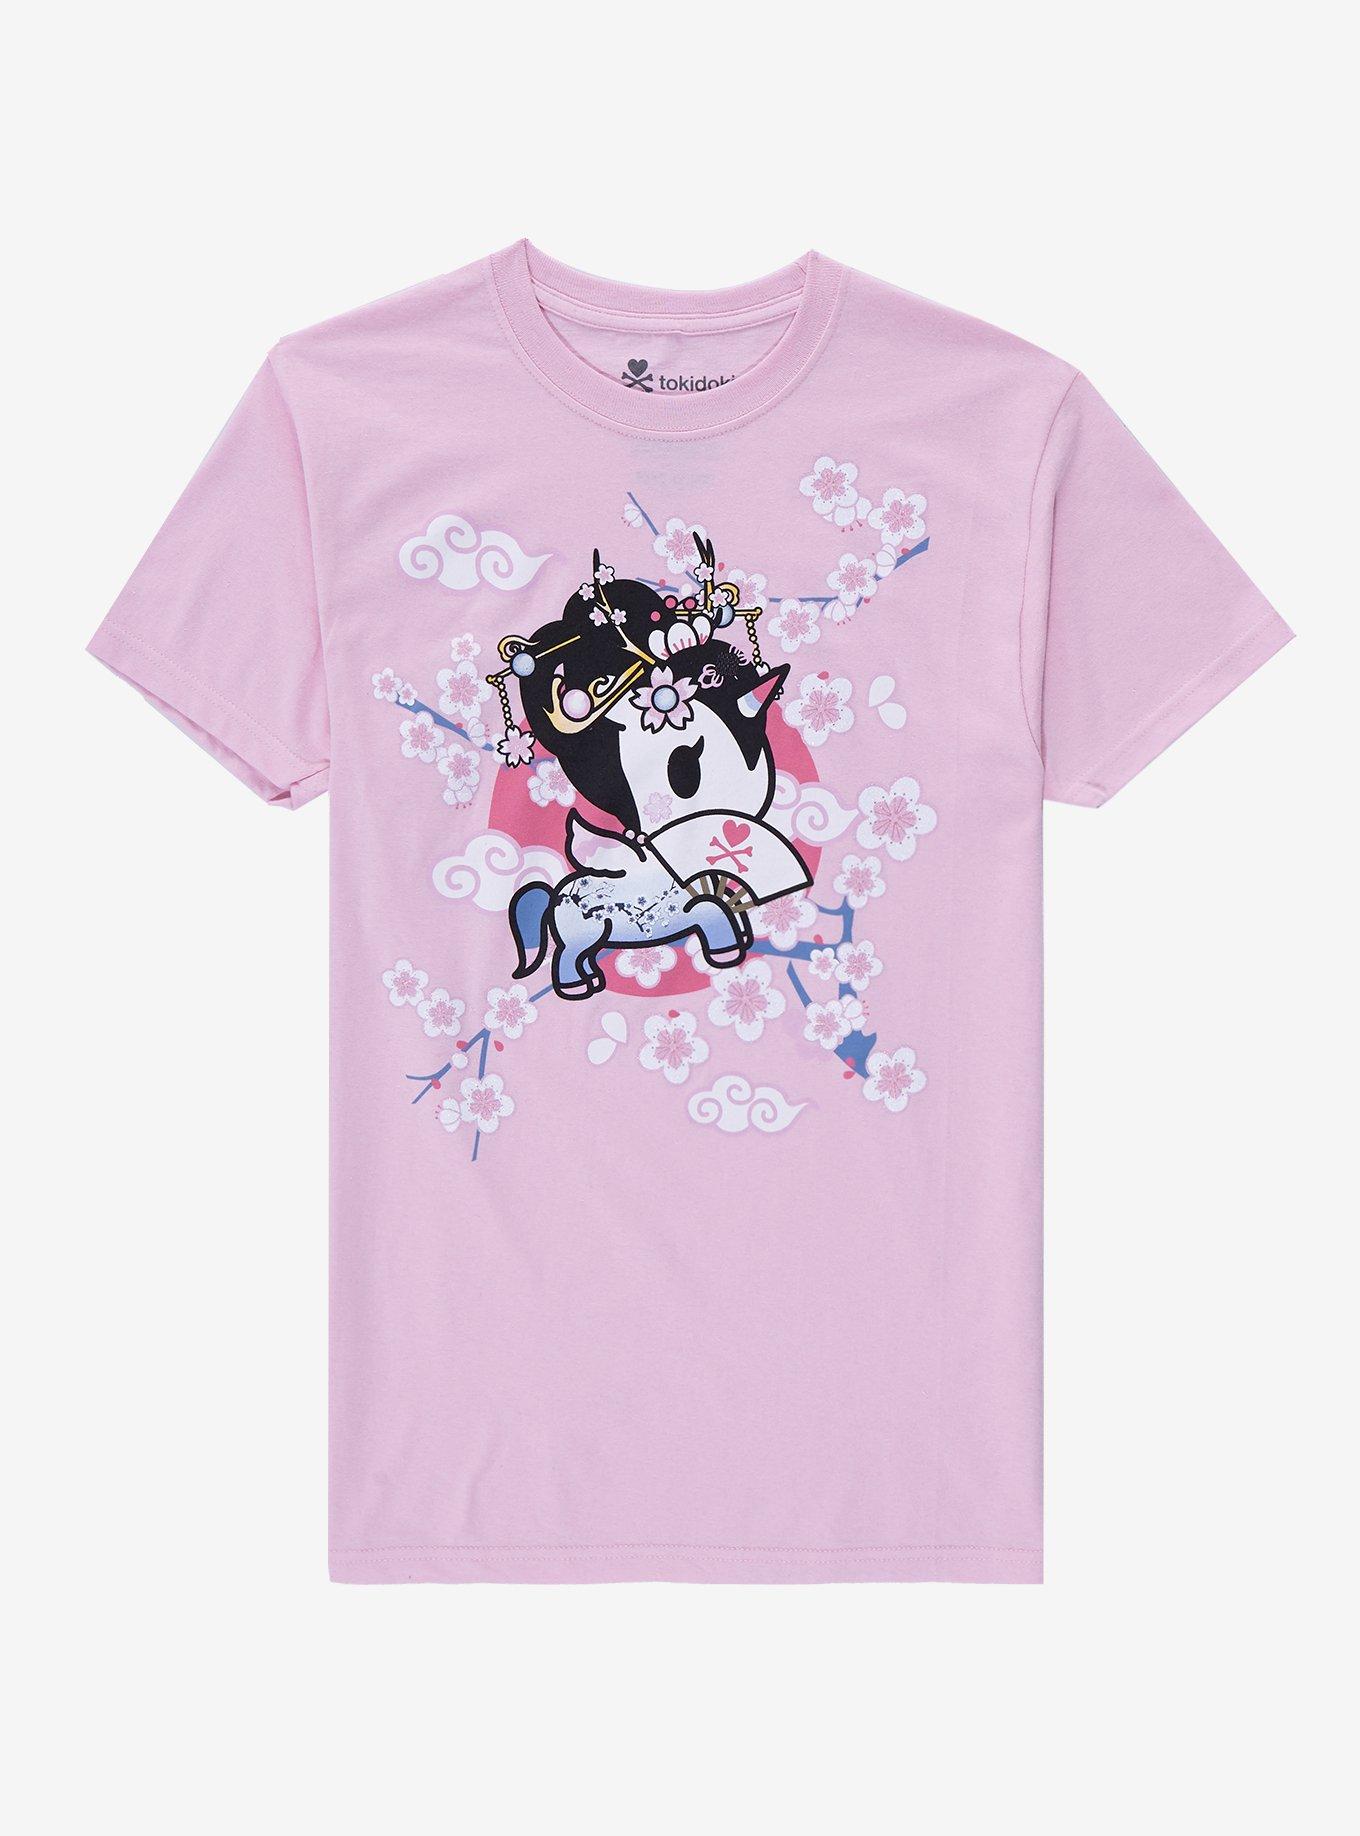 Tokidoki Yoshino Unicorno Boyfriend Fit Girls T-Shirt